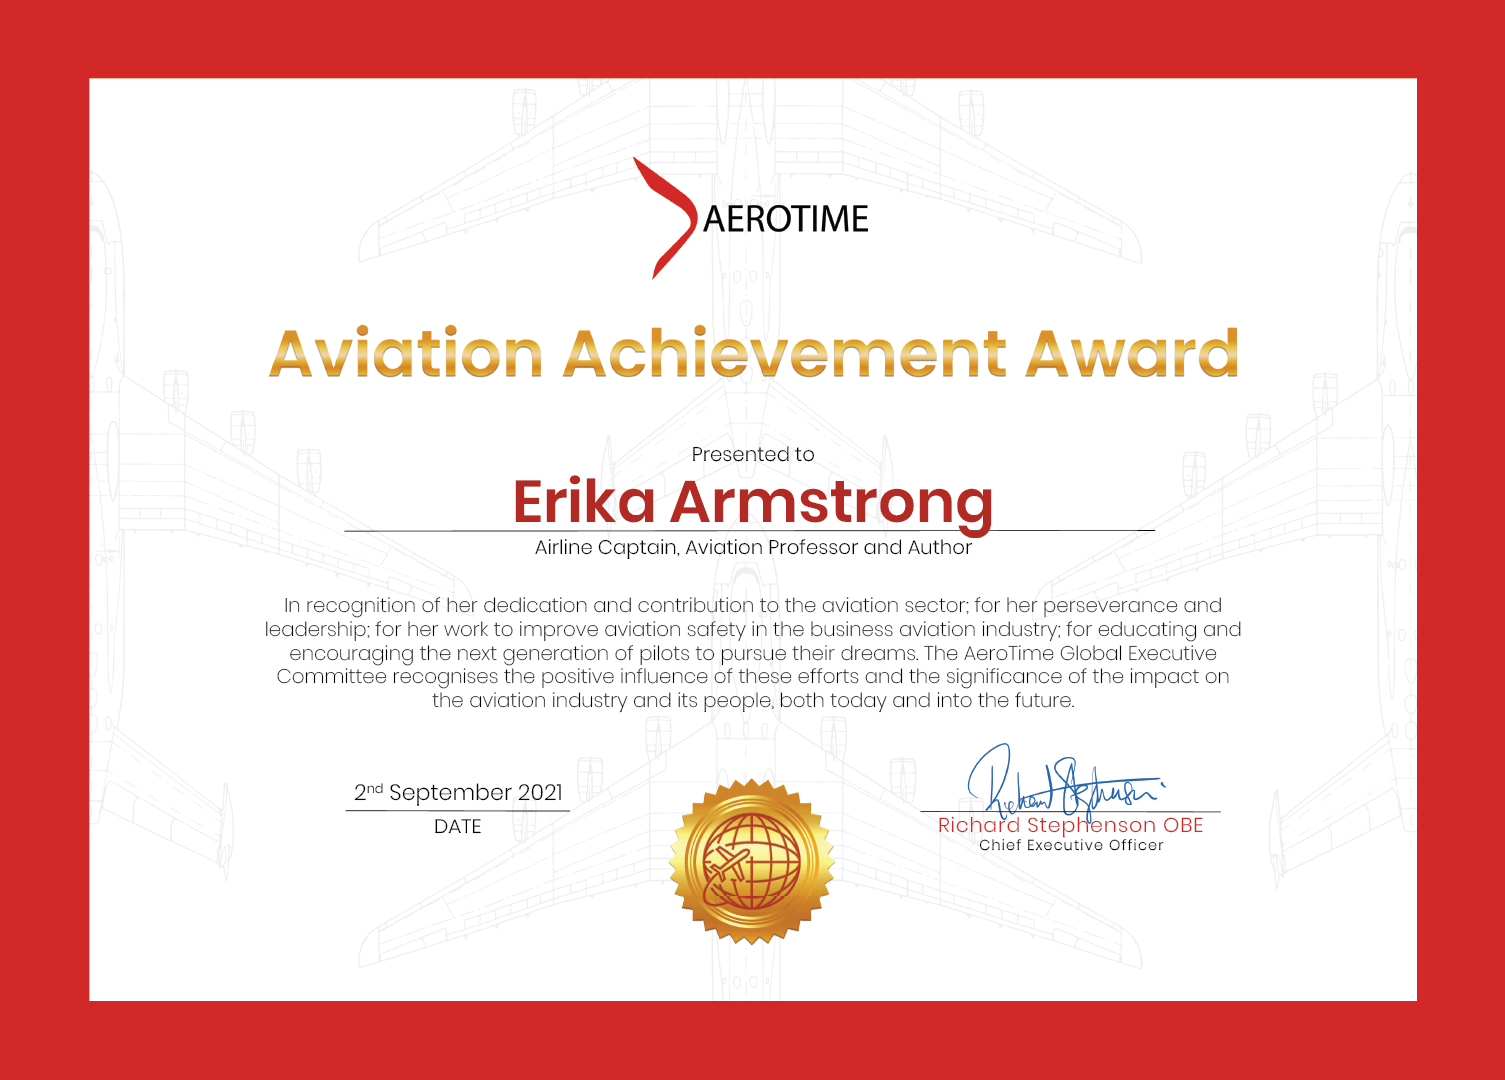 Erika Armstrong, AeroTime Aviation Achievement Award